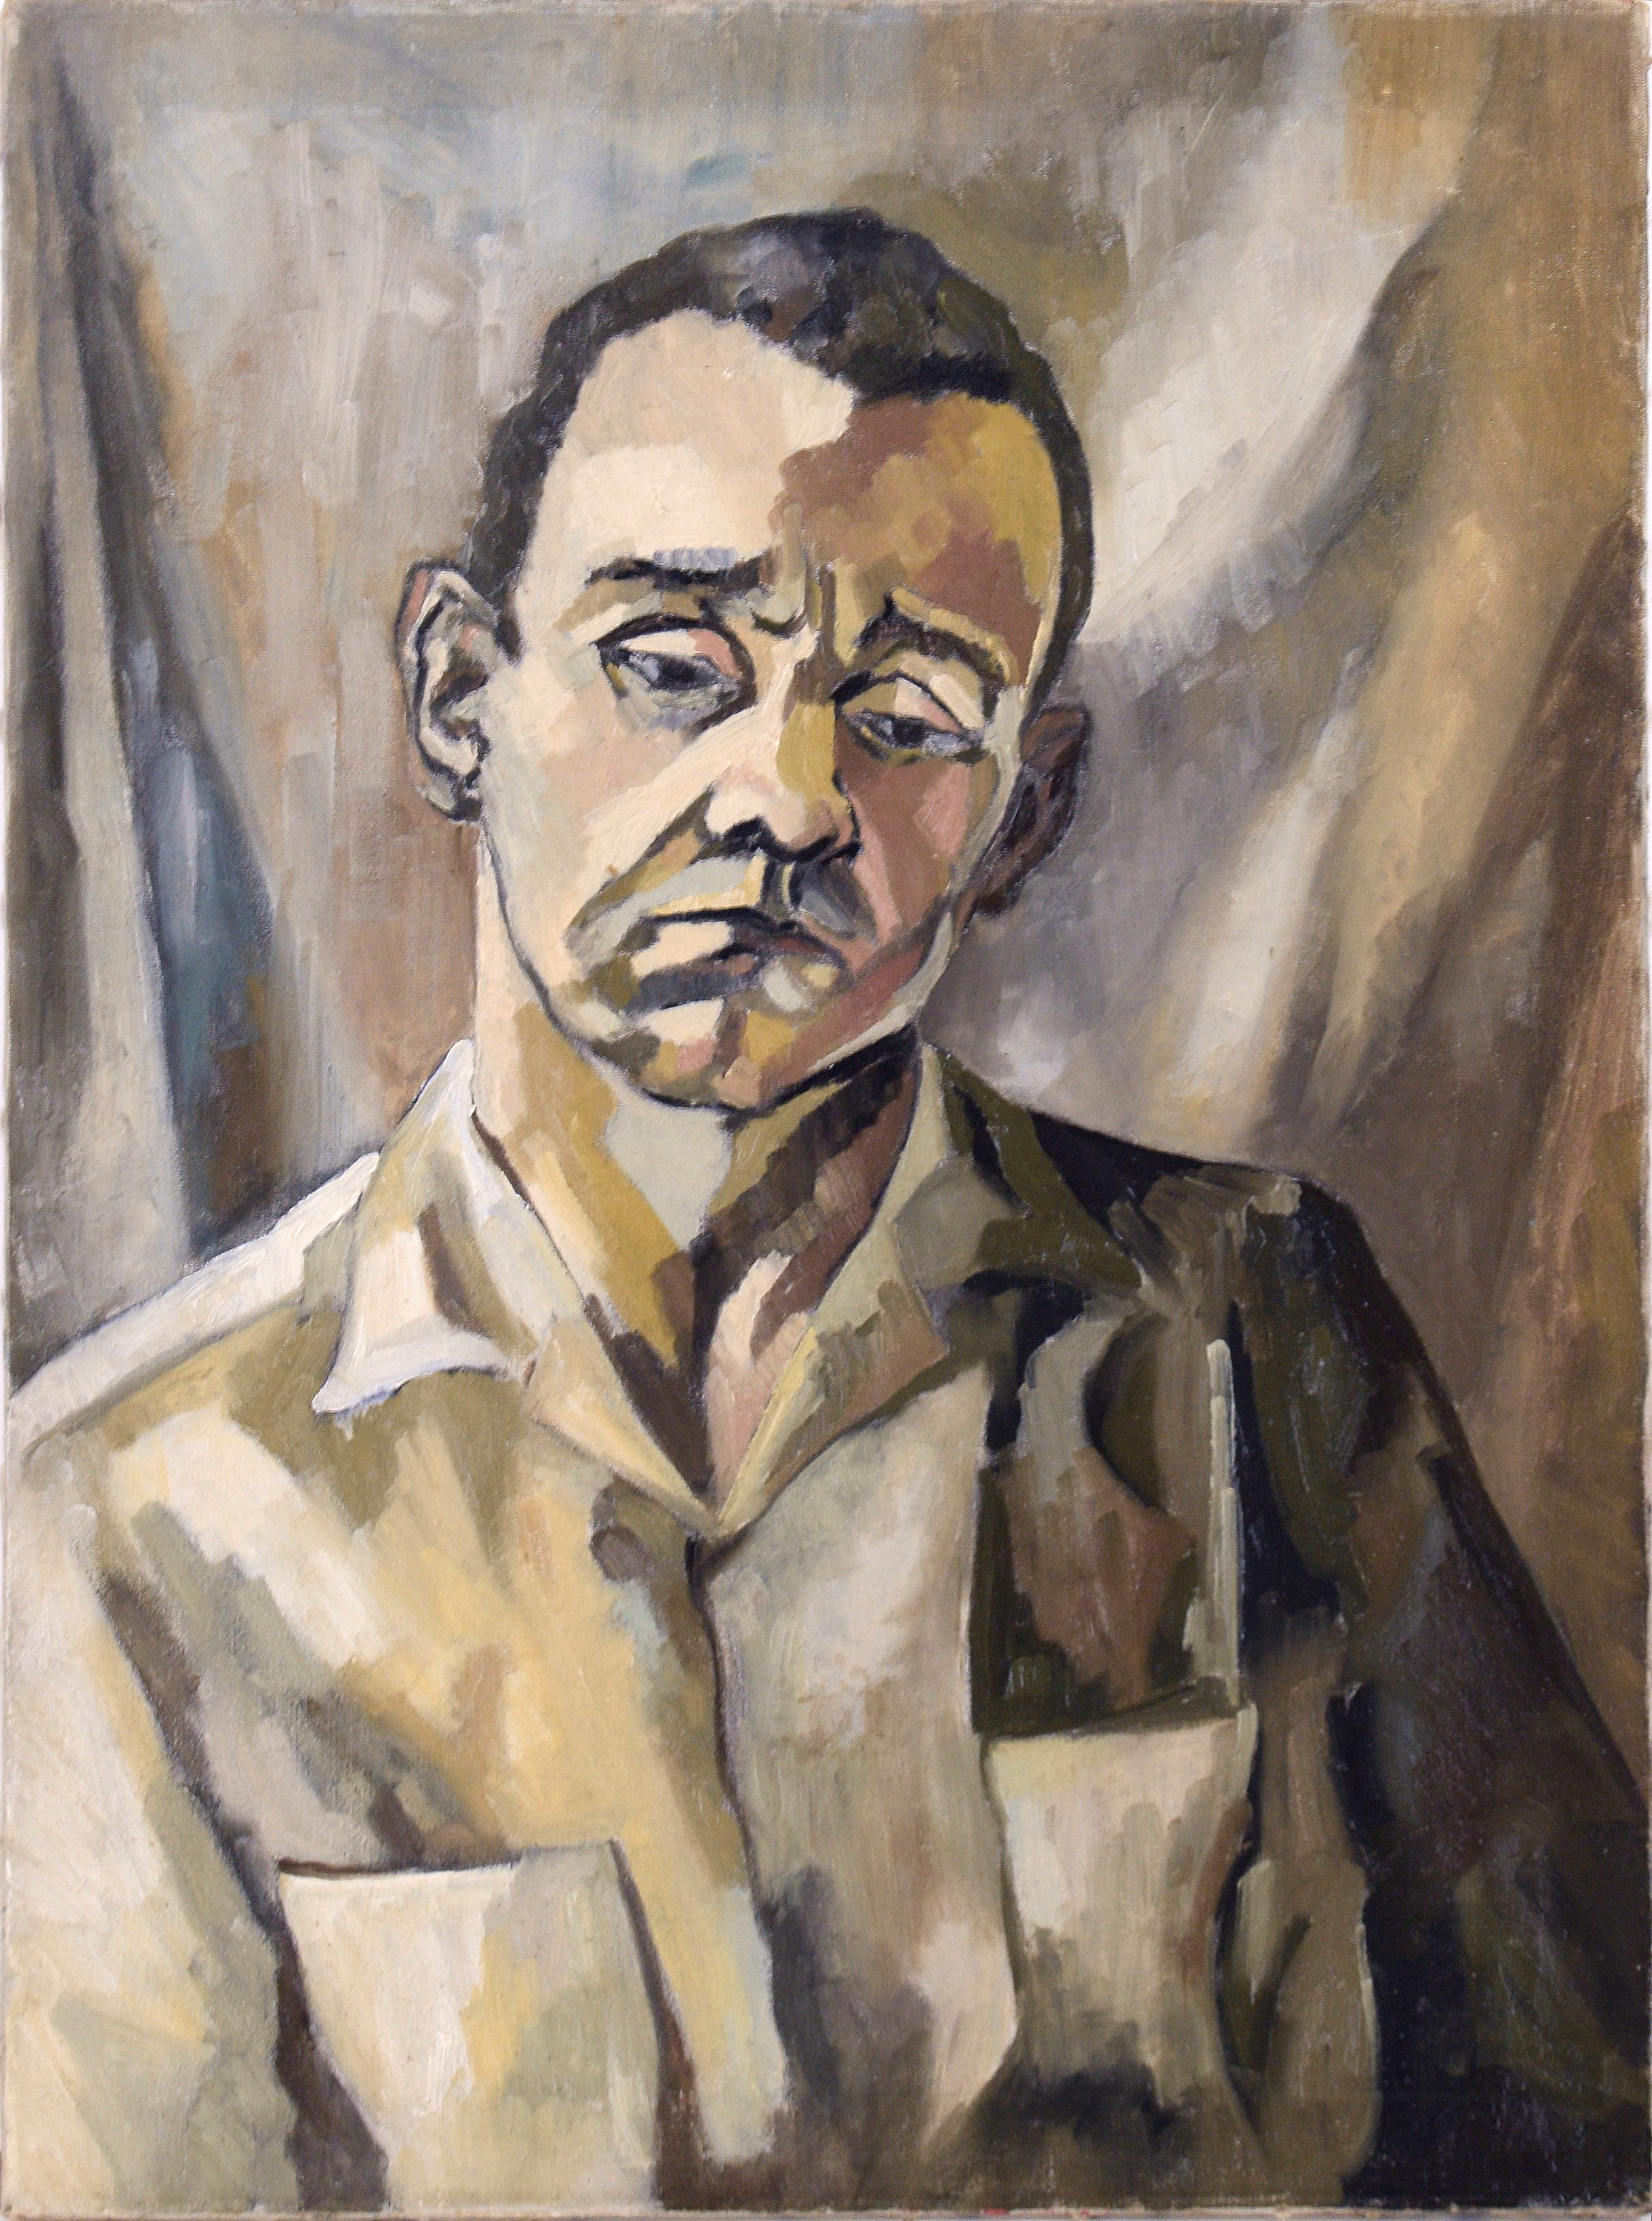 Mid-Century Modern Man - Portrait in Oil on Canvas